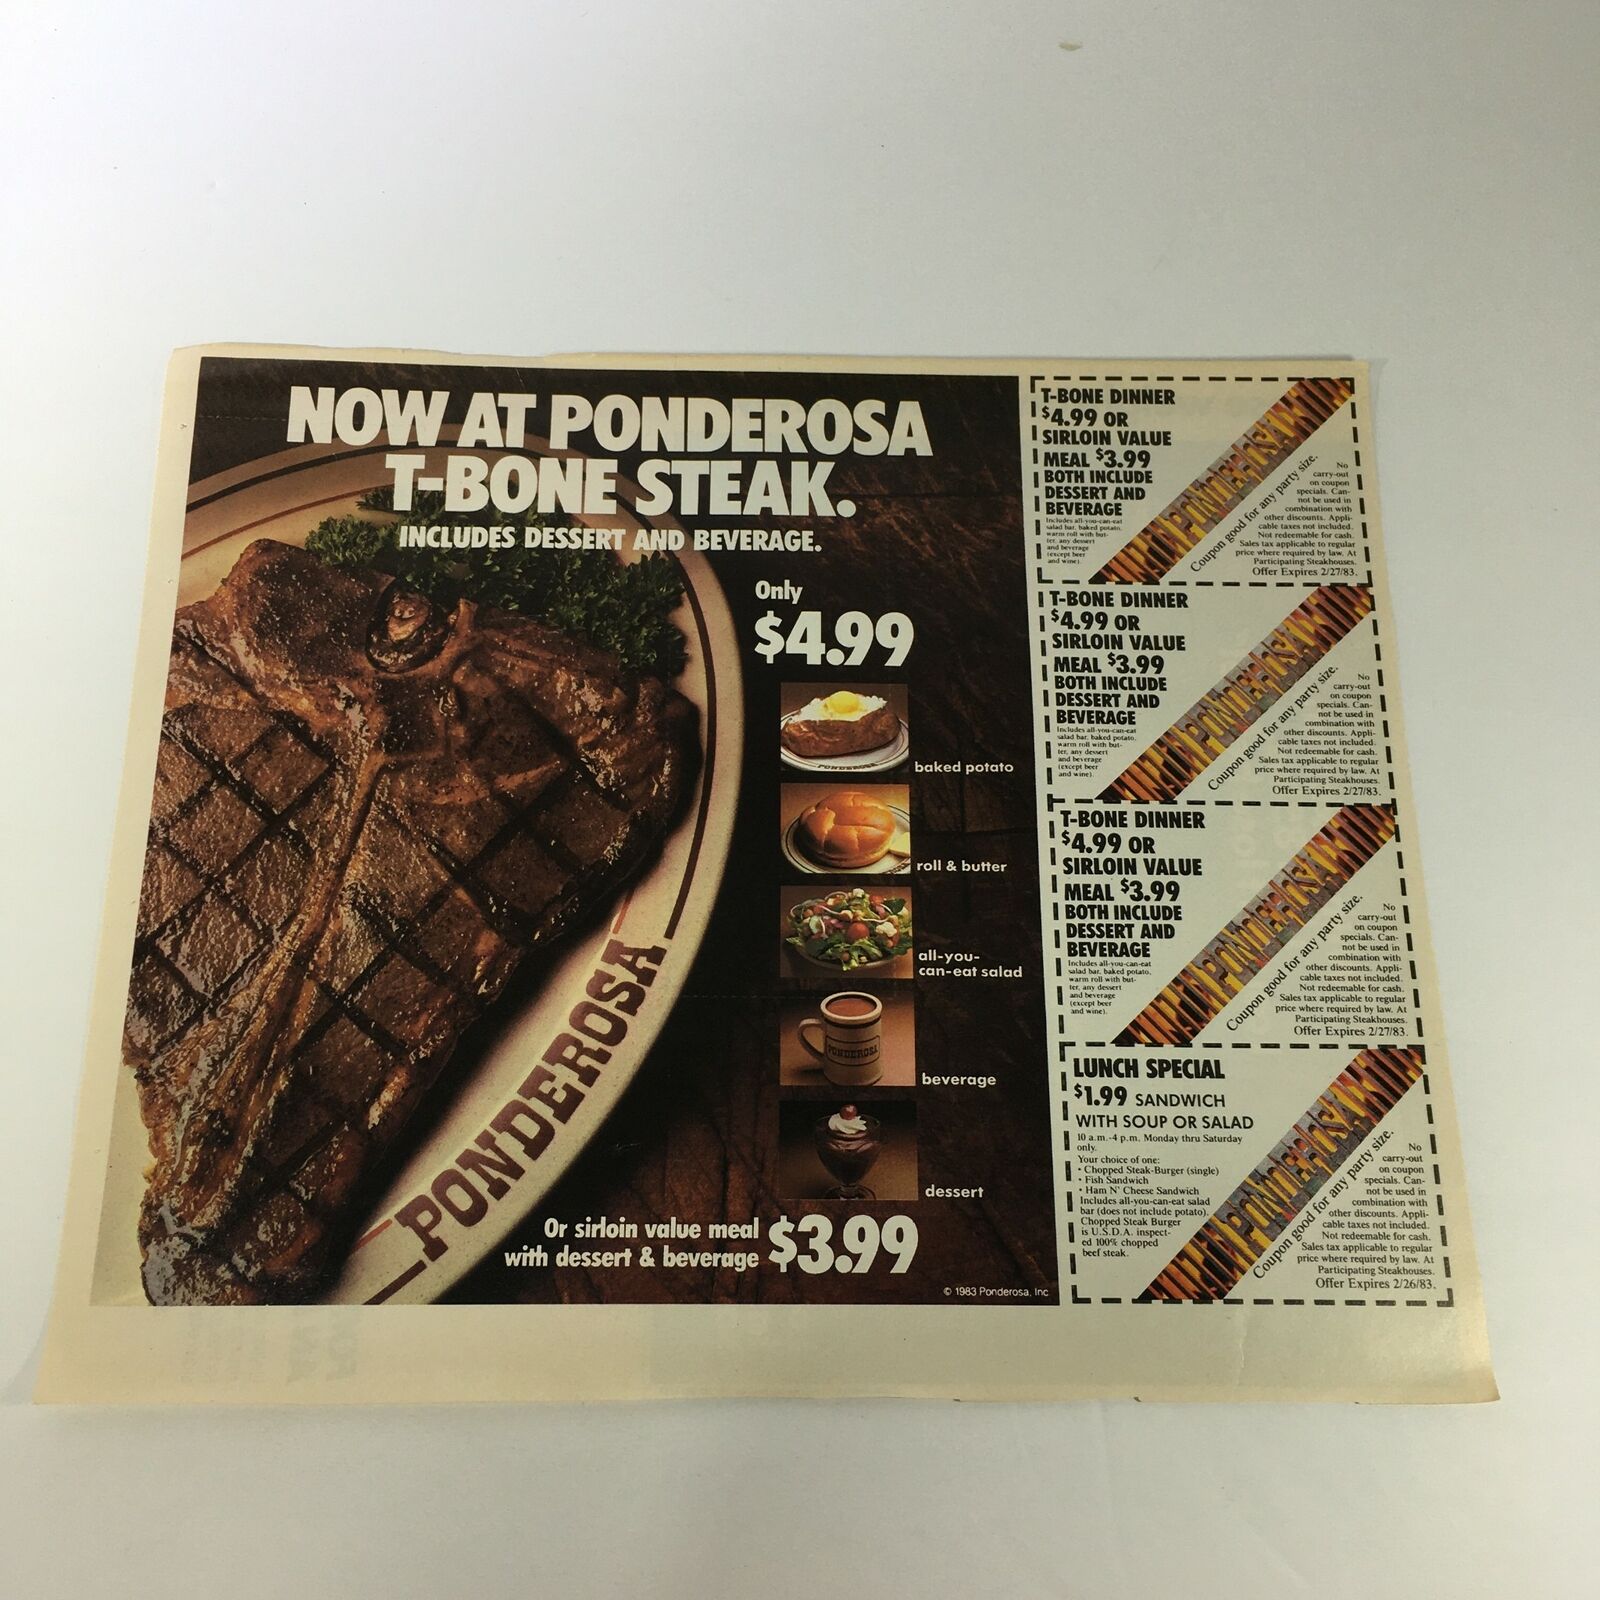 VTG Retro 1983 Ponderosa T-Bone Steak Sirloin Value Meal Print Ad Coupon